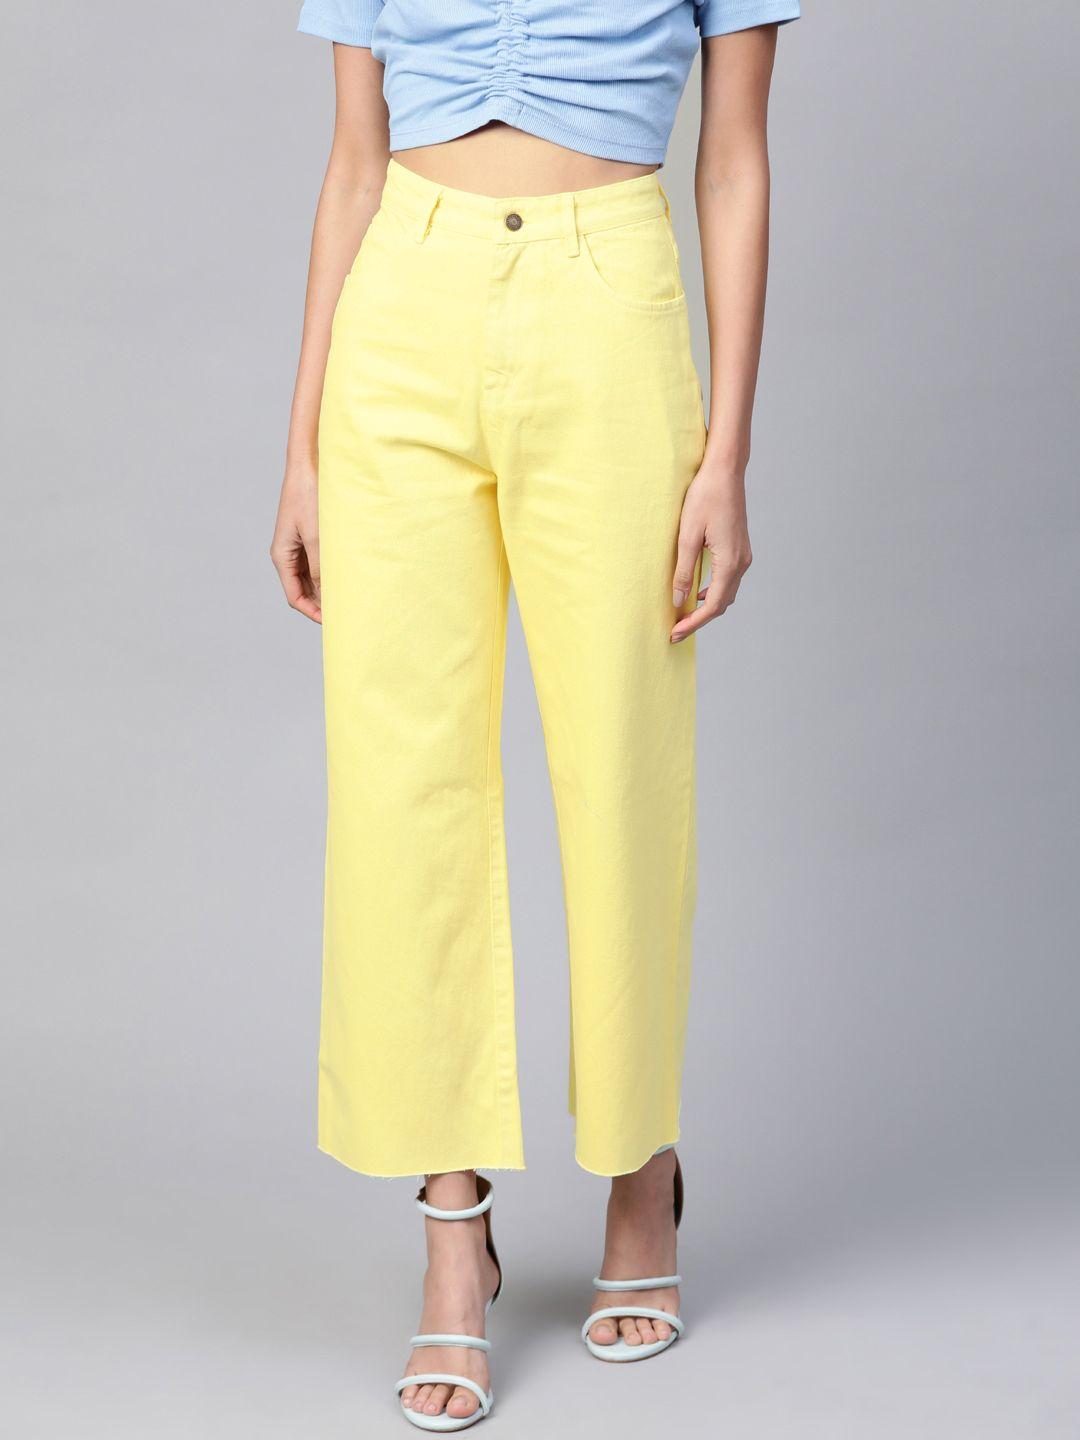 sassafras women yellow relaxed fit high-rise jeans